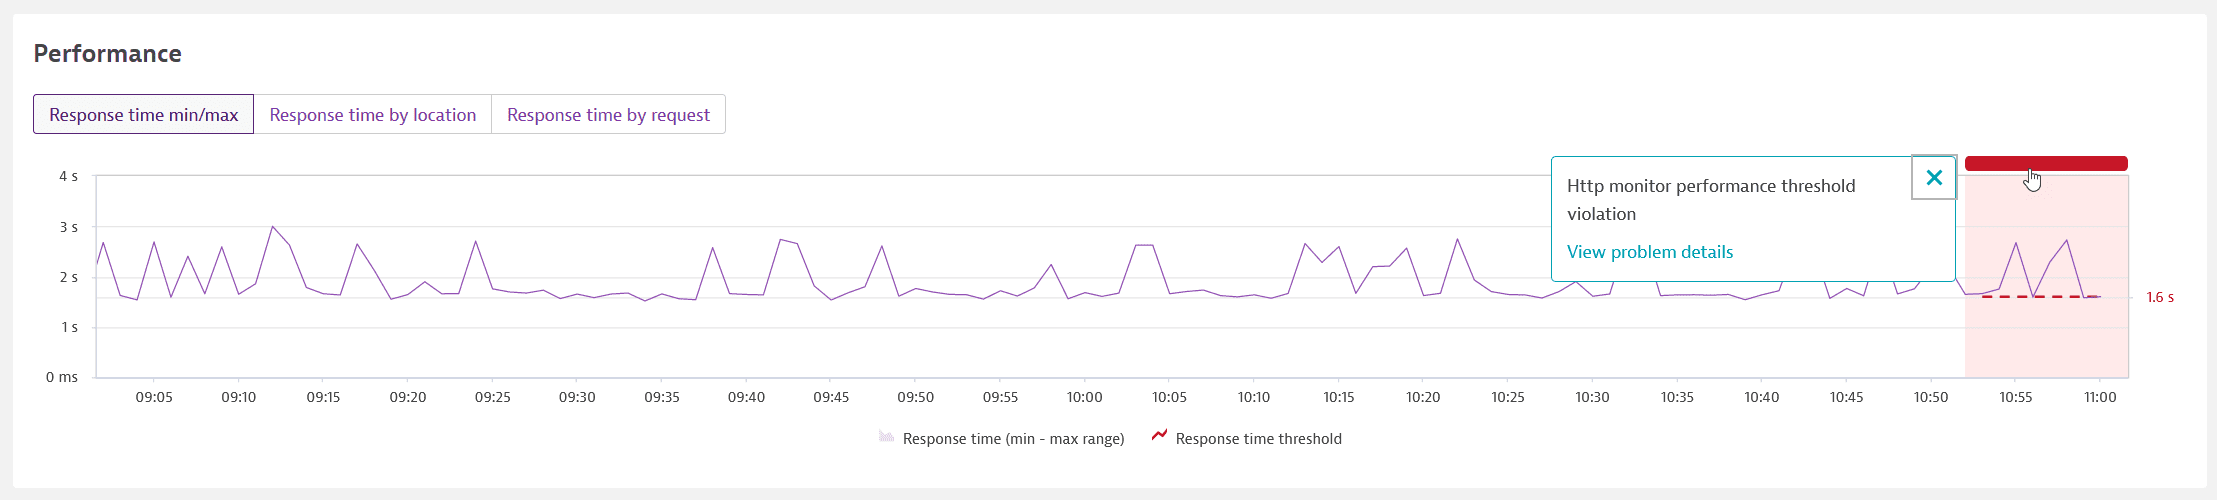 HTTP monitor performance problem